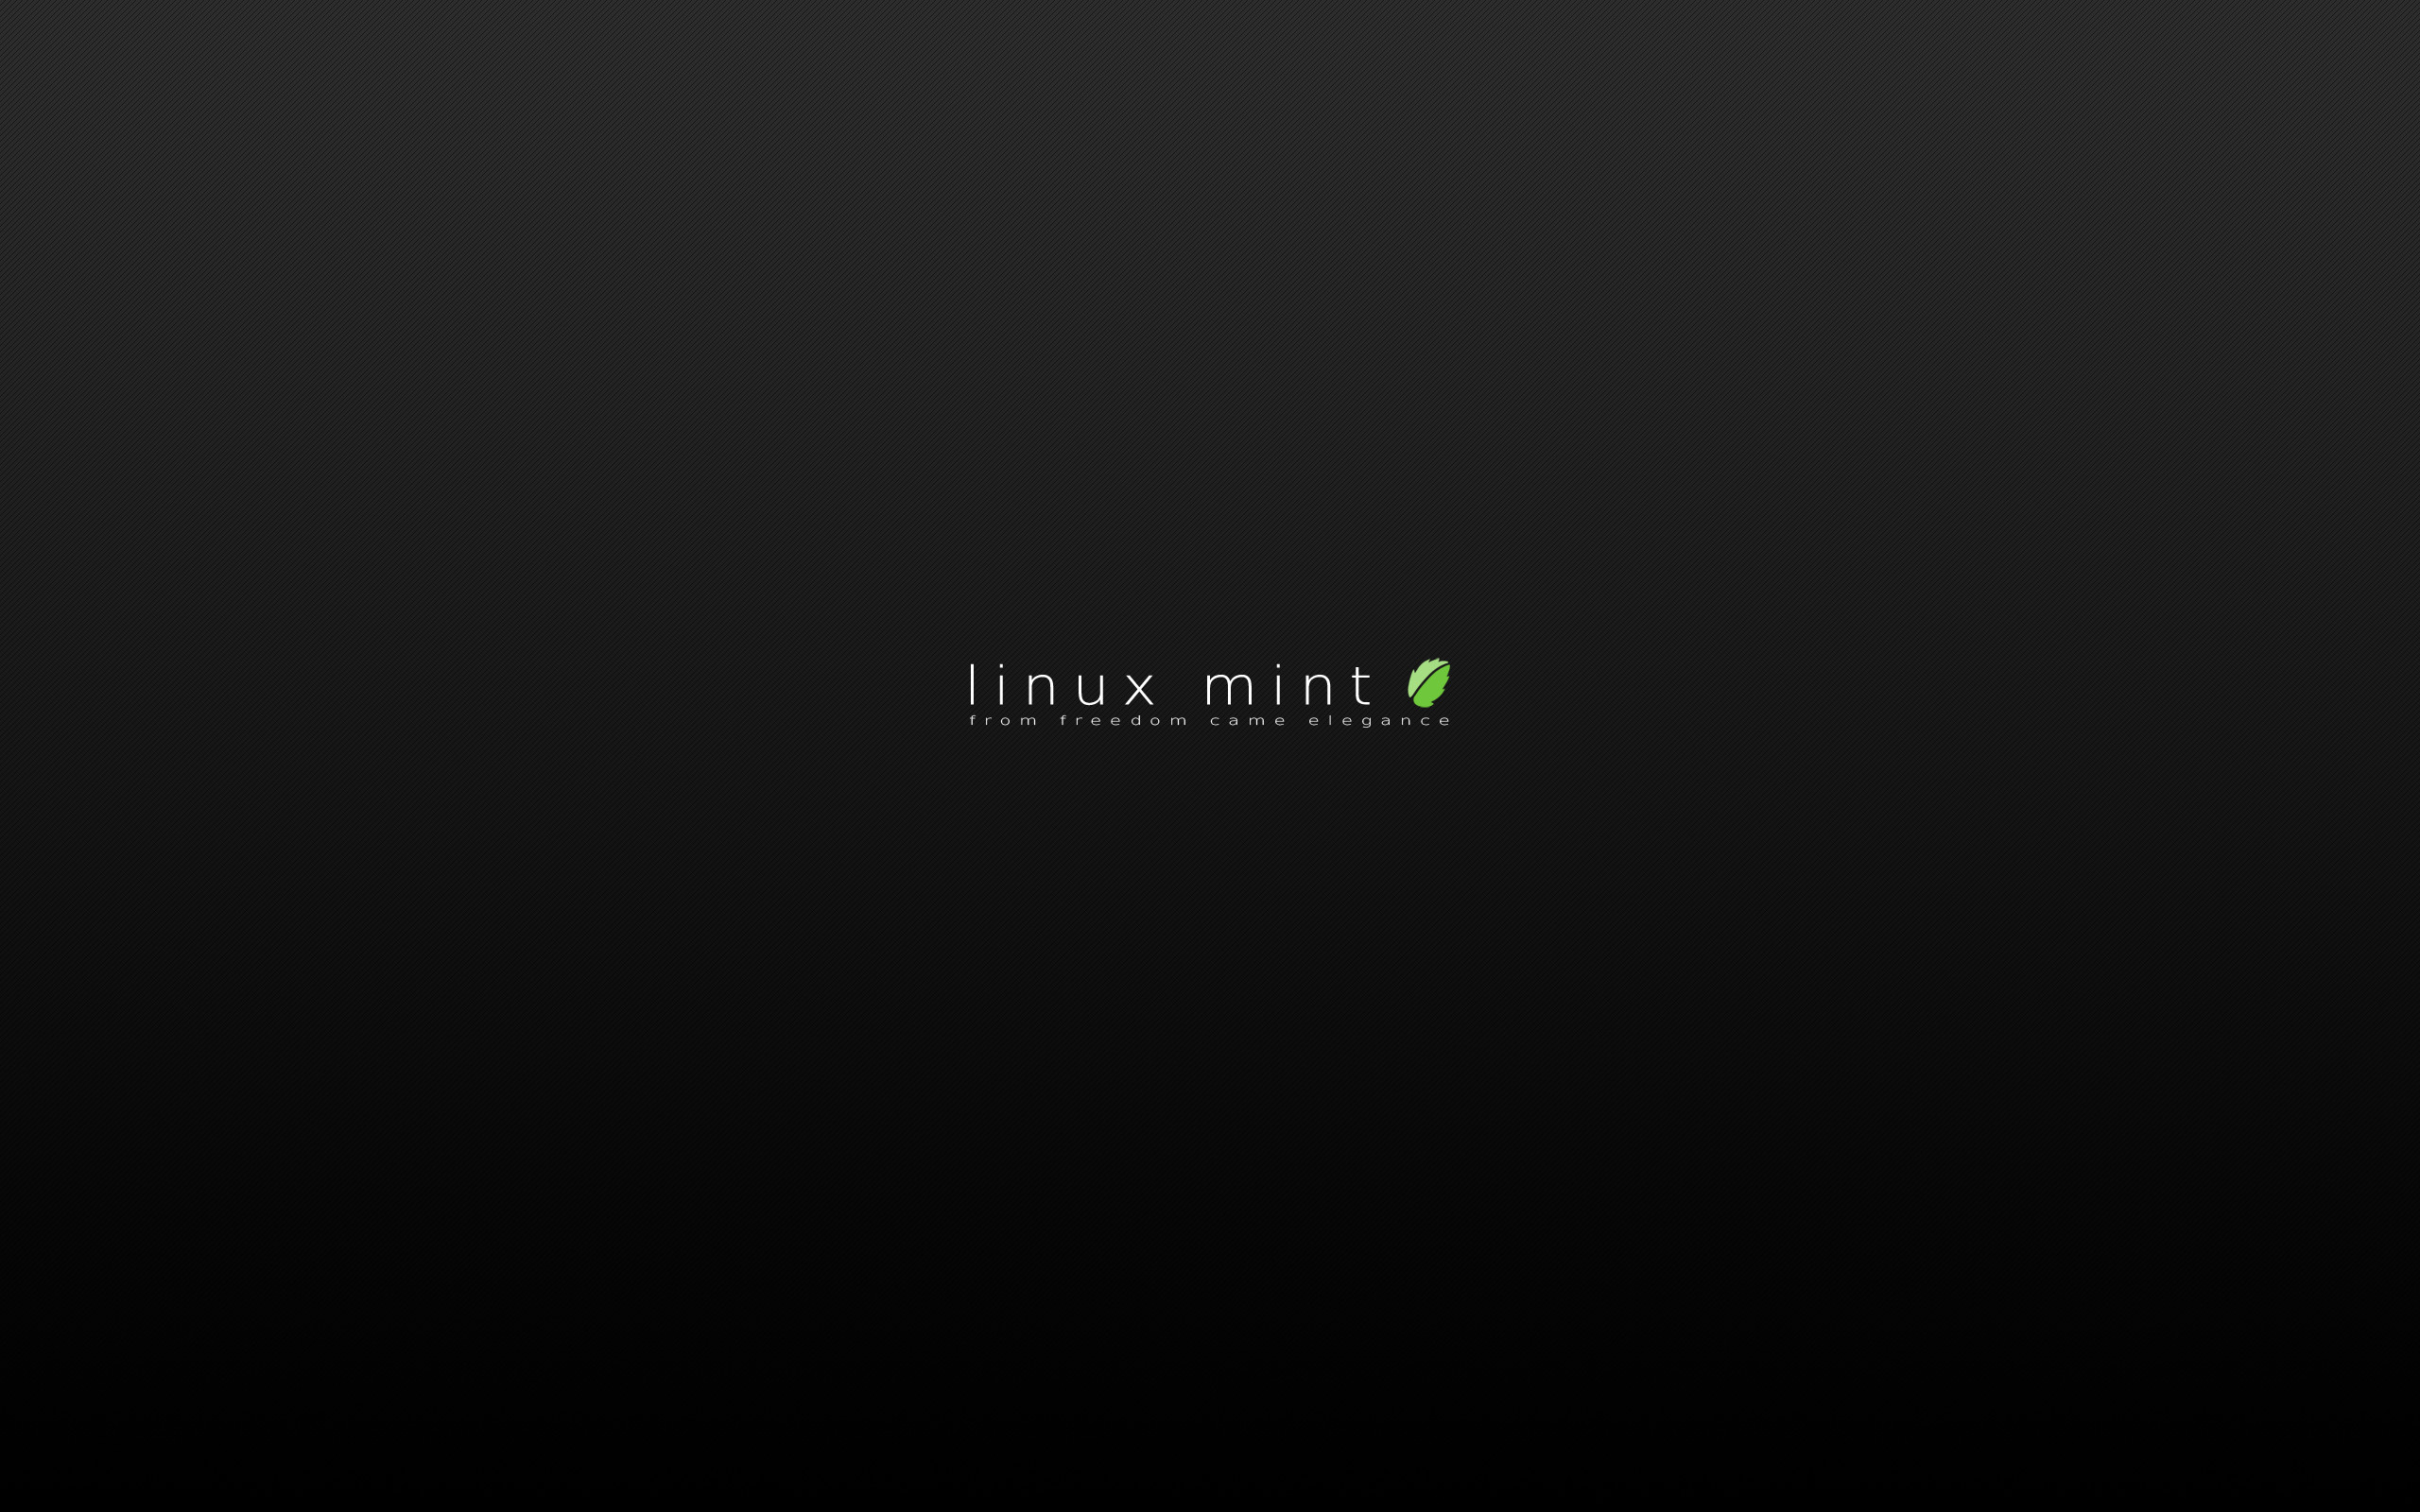 2560x1600 Dark Linux Mint Wallpaper Background 51596